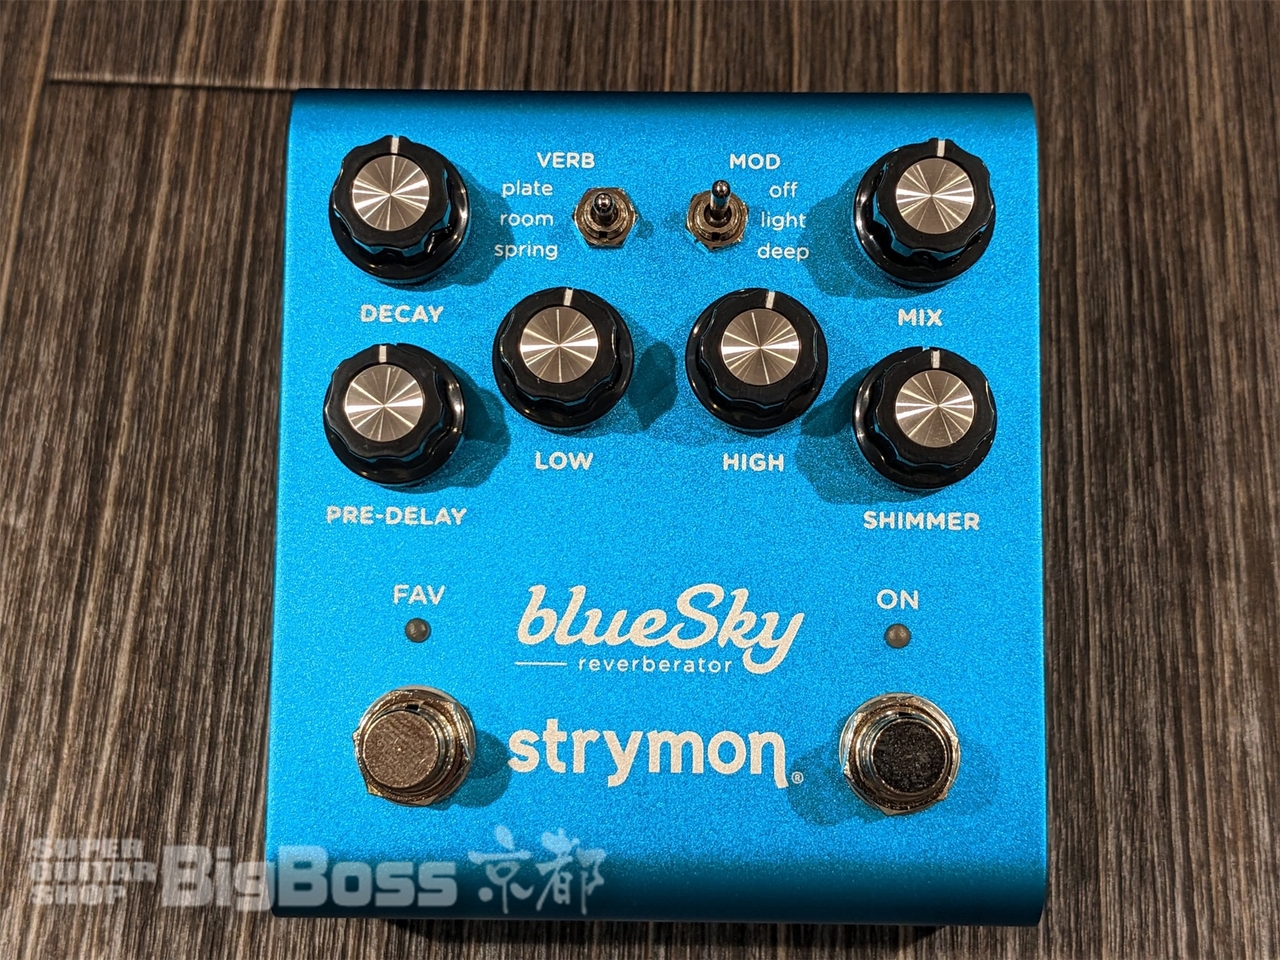 blueSky Strymon - レコーディング/PA機器